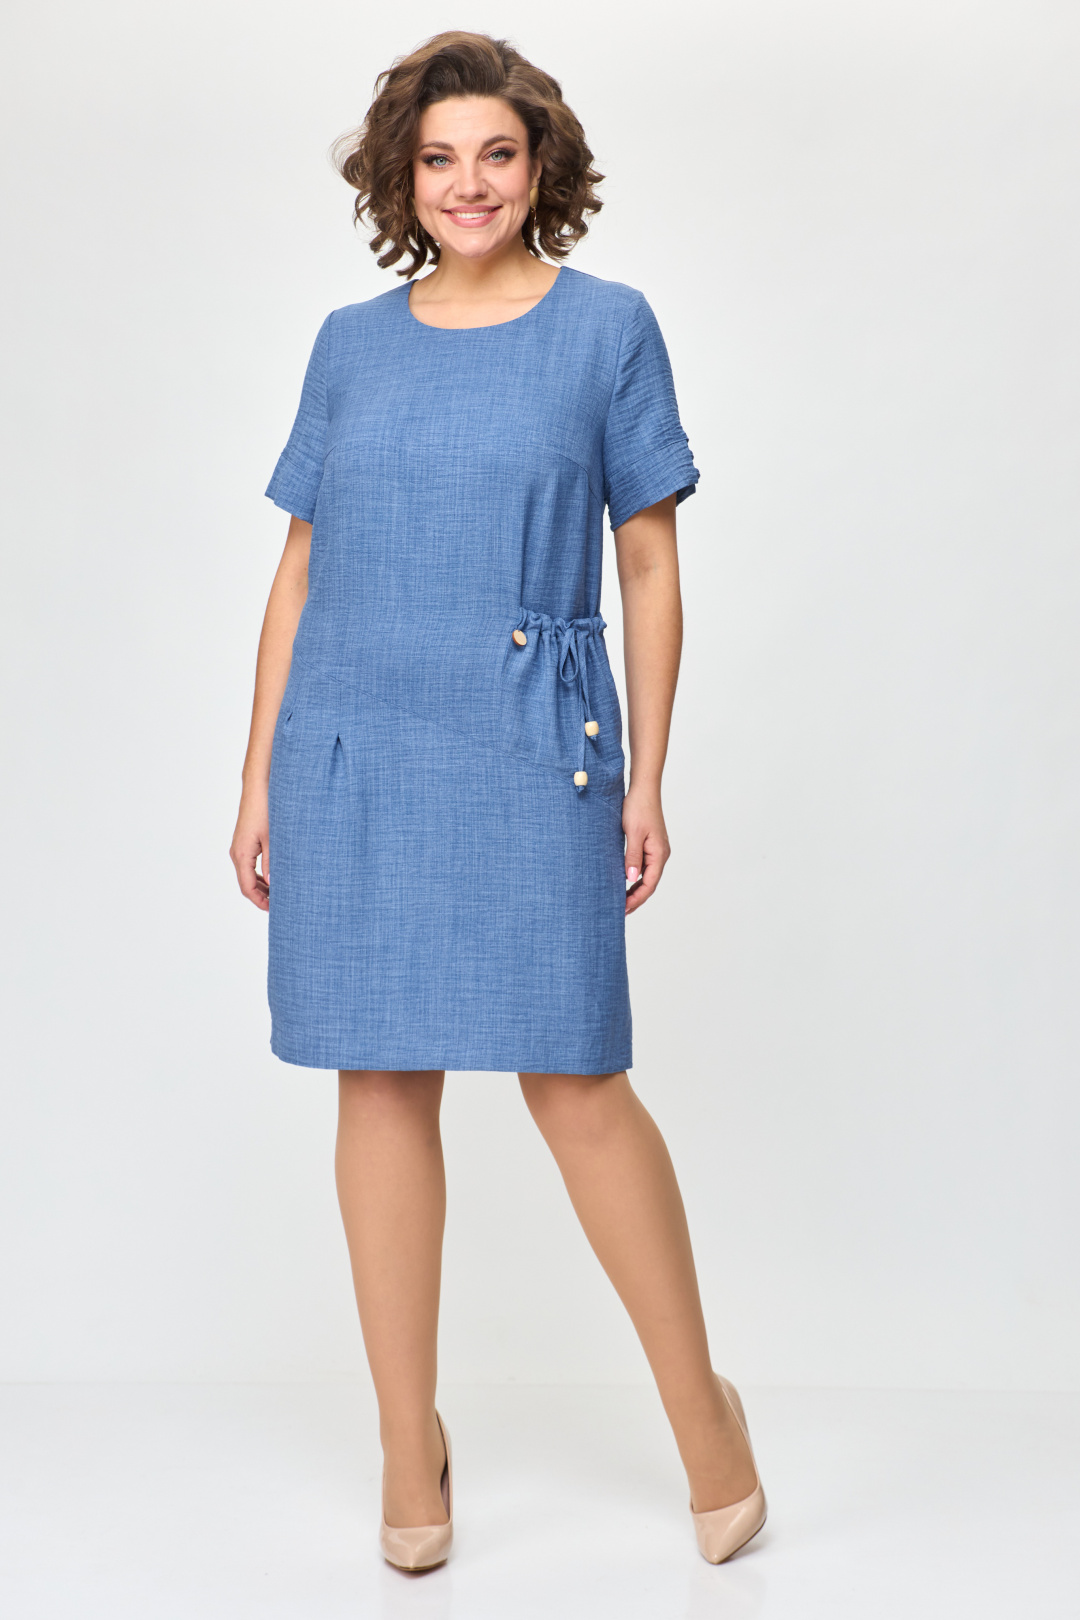 Платье Мода-Версаль 2469 голубой